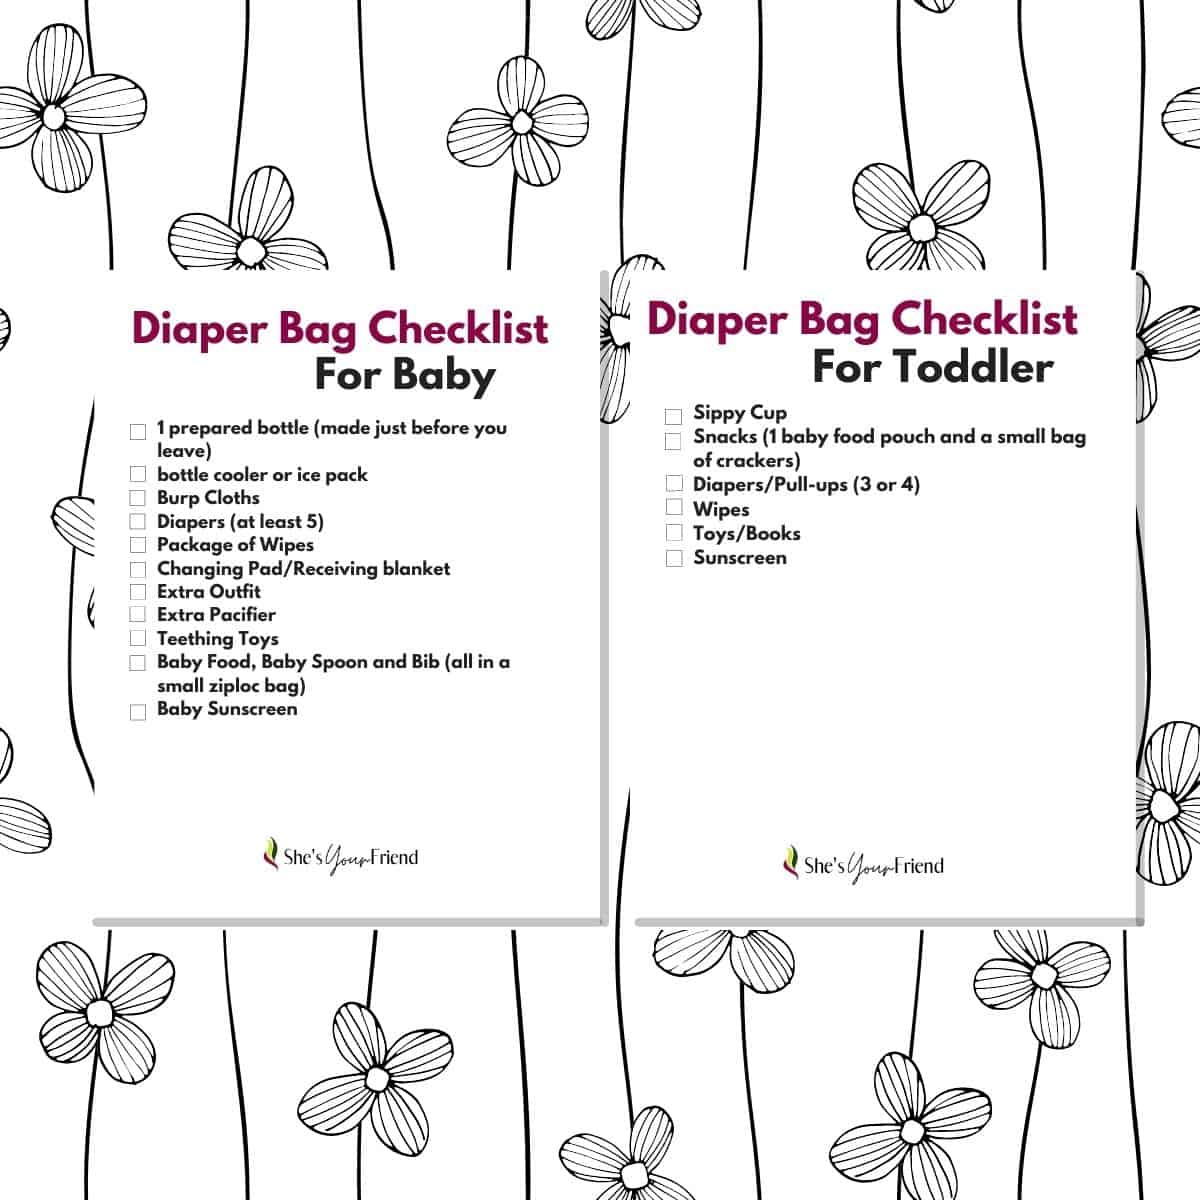 a diaper bag checklist for baby and a checklist for toddler diaper bag essentials